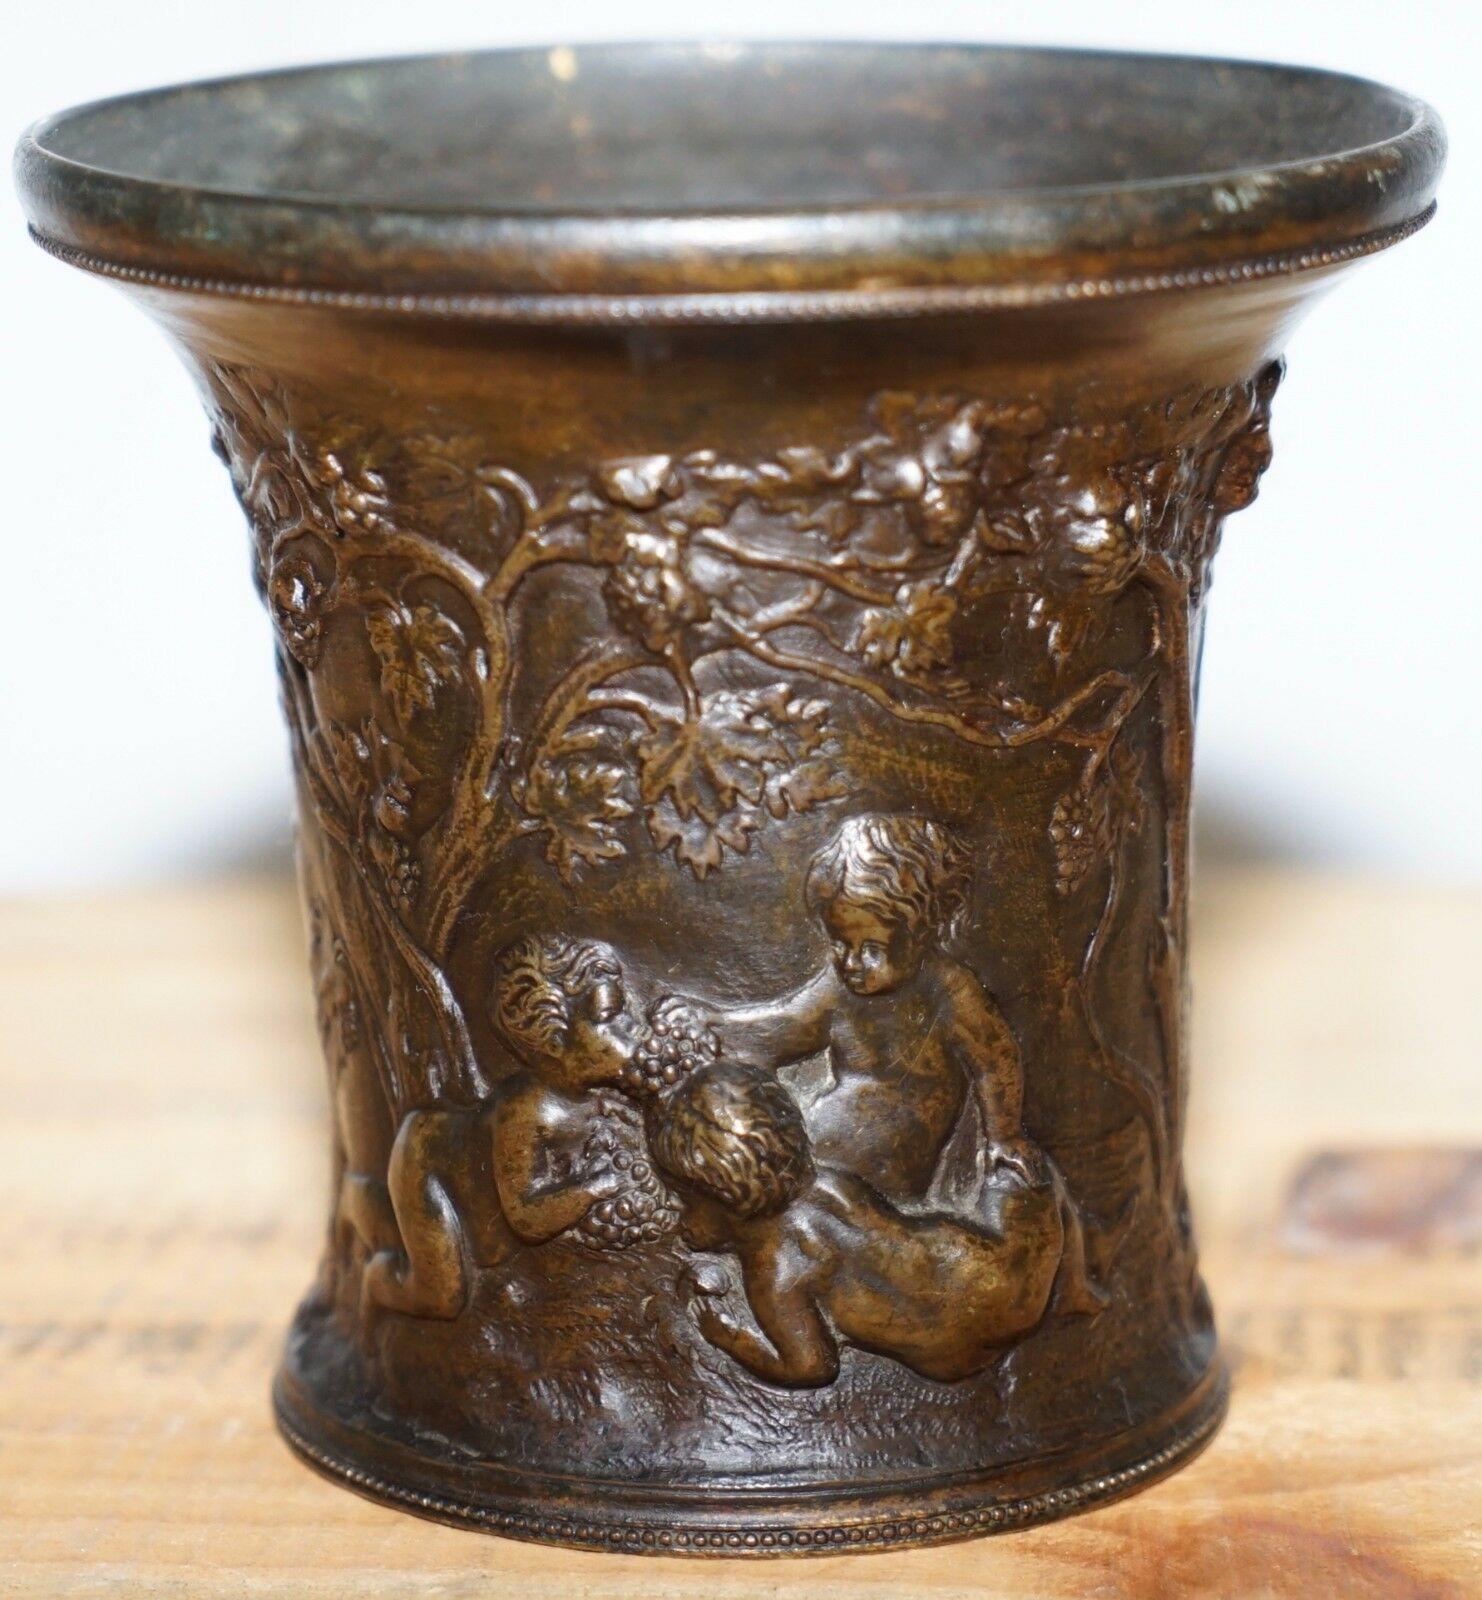 George II Rare 18th Century circa 1740 Heavy Cast Bronze Pot Decorated with Putti Cherubs